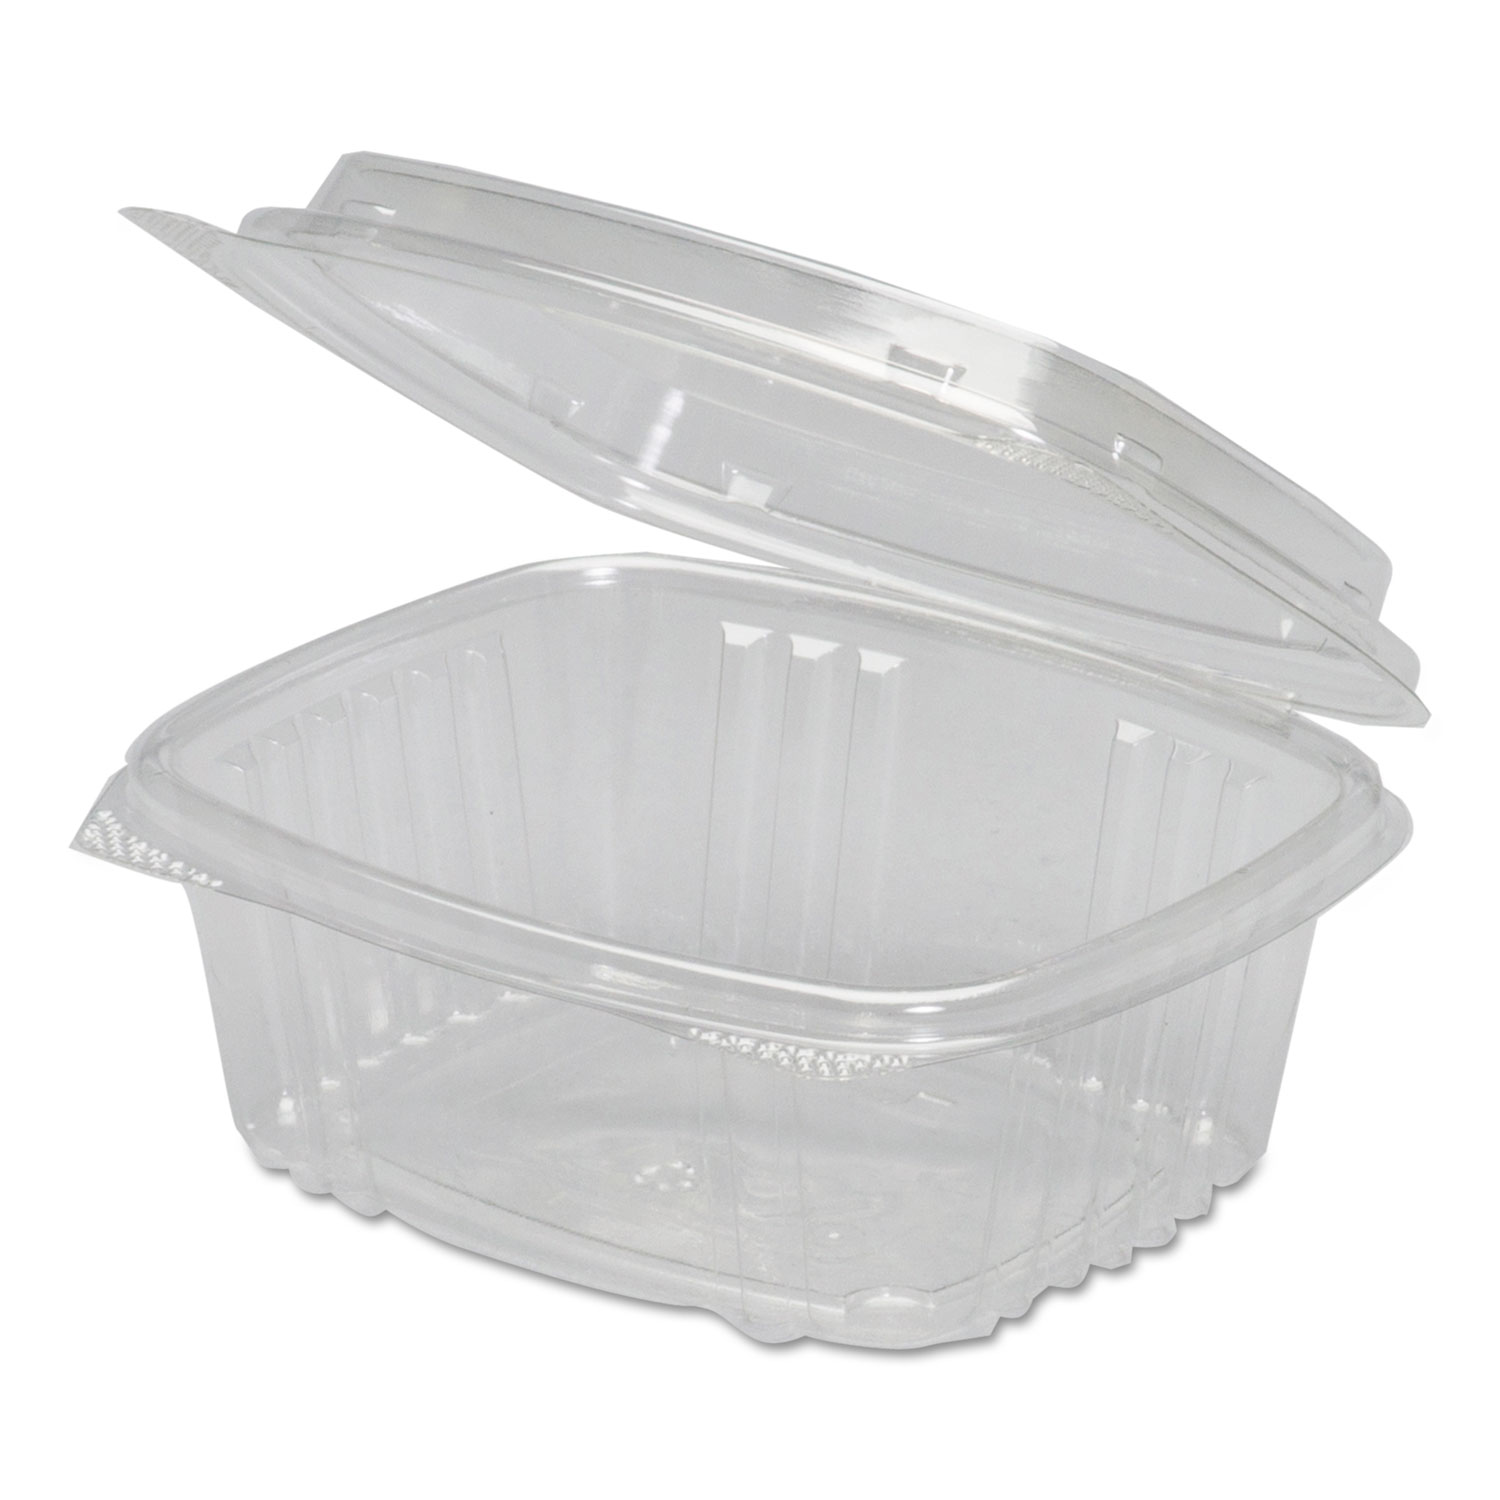  Genpak AD12--- Clear Hinged Deli Container, Plastic, 12 oz, 5-3/8 x 4-1/2 x 2-1/2, 200/Carton (GNPAD12) 